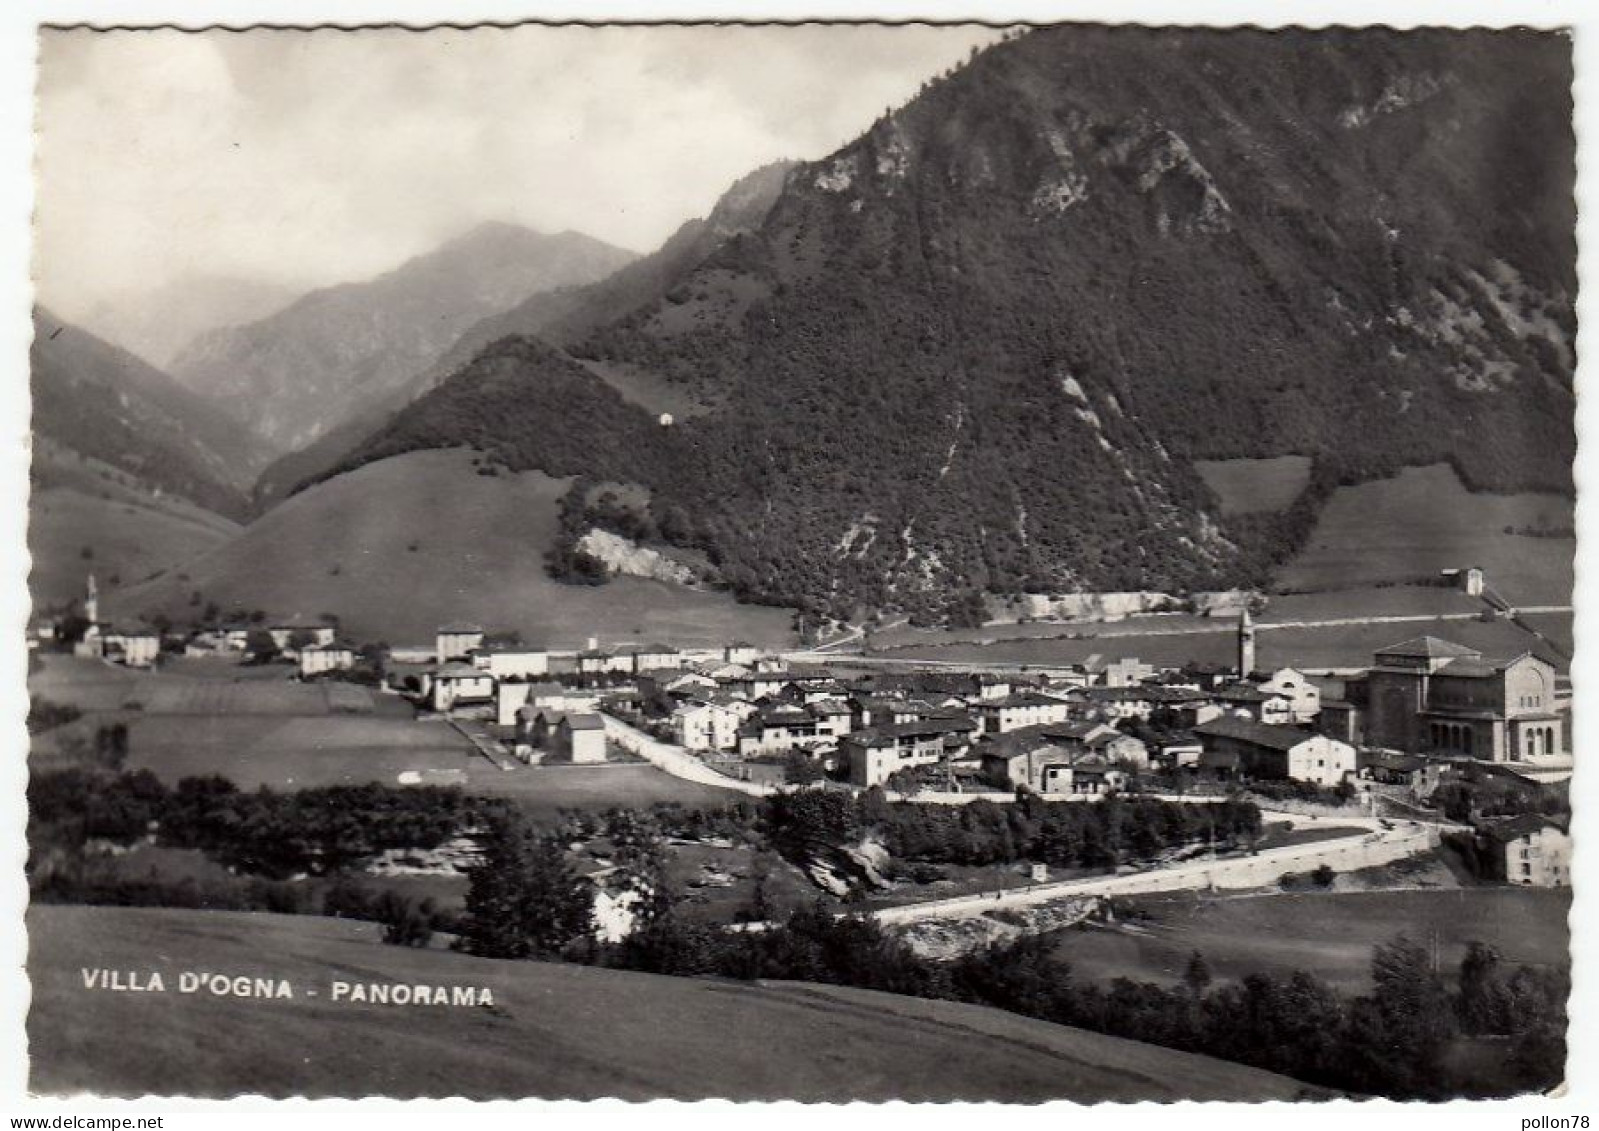 VILLA D'OGNA - PANORAMA - VALLE SERIANA - BERGAMO - 1955 - Bergamo